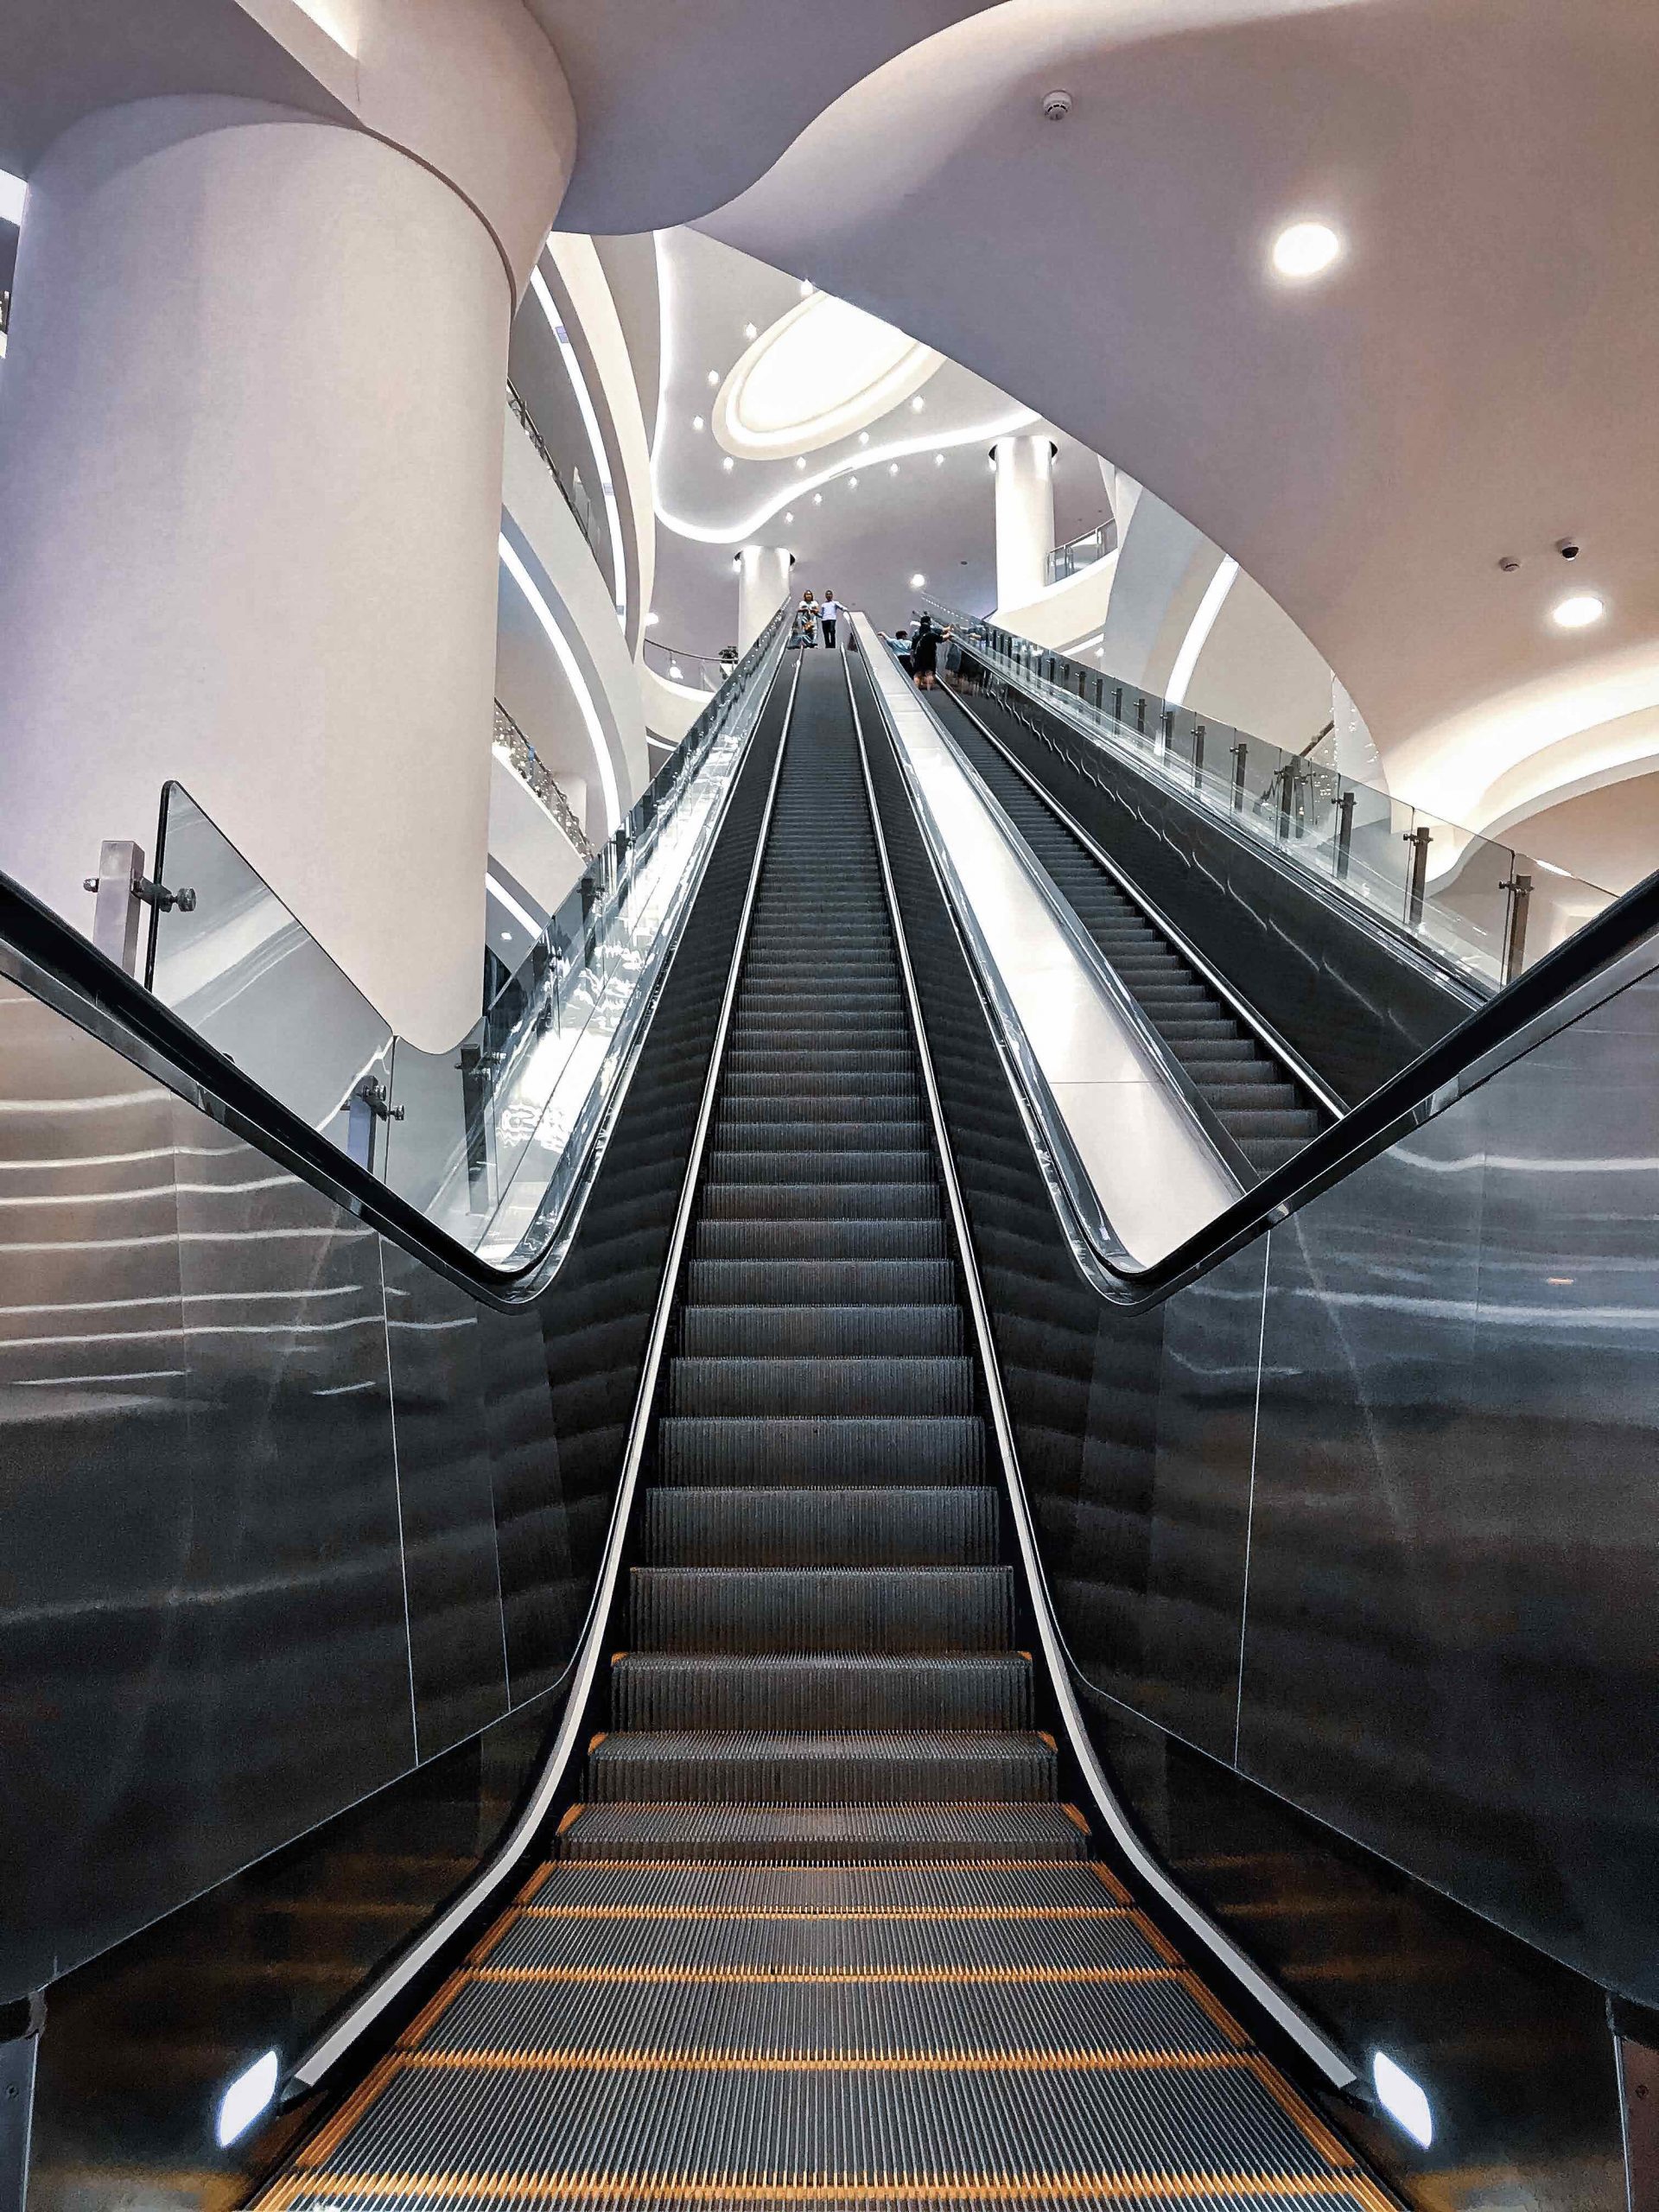 long-escalator-at-shopping-mall-2022-11-09-10-25-25-utc-2